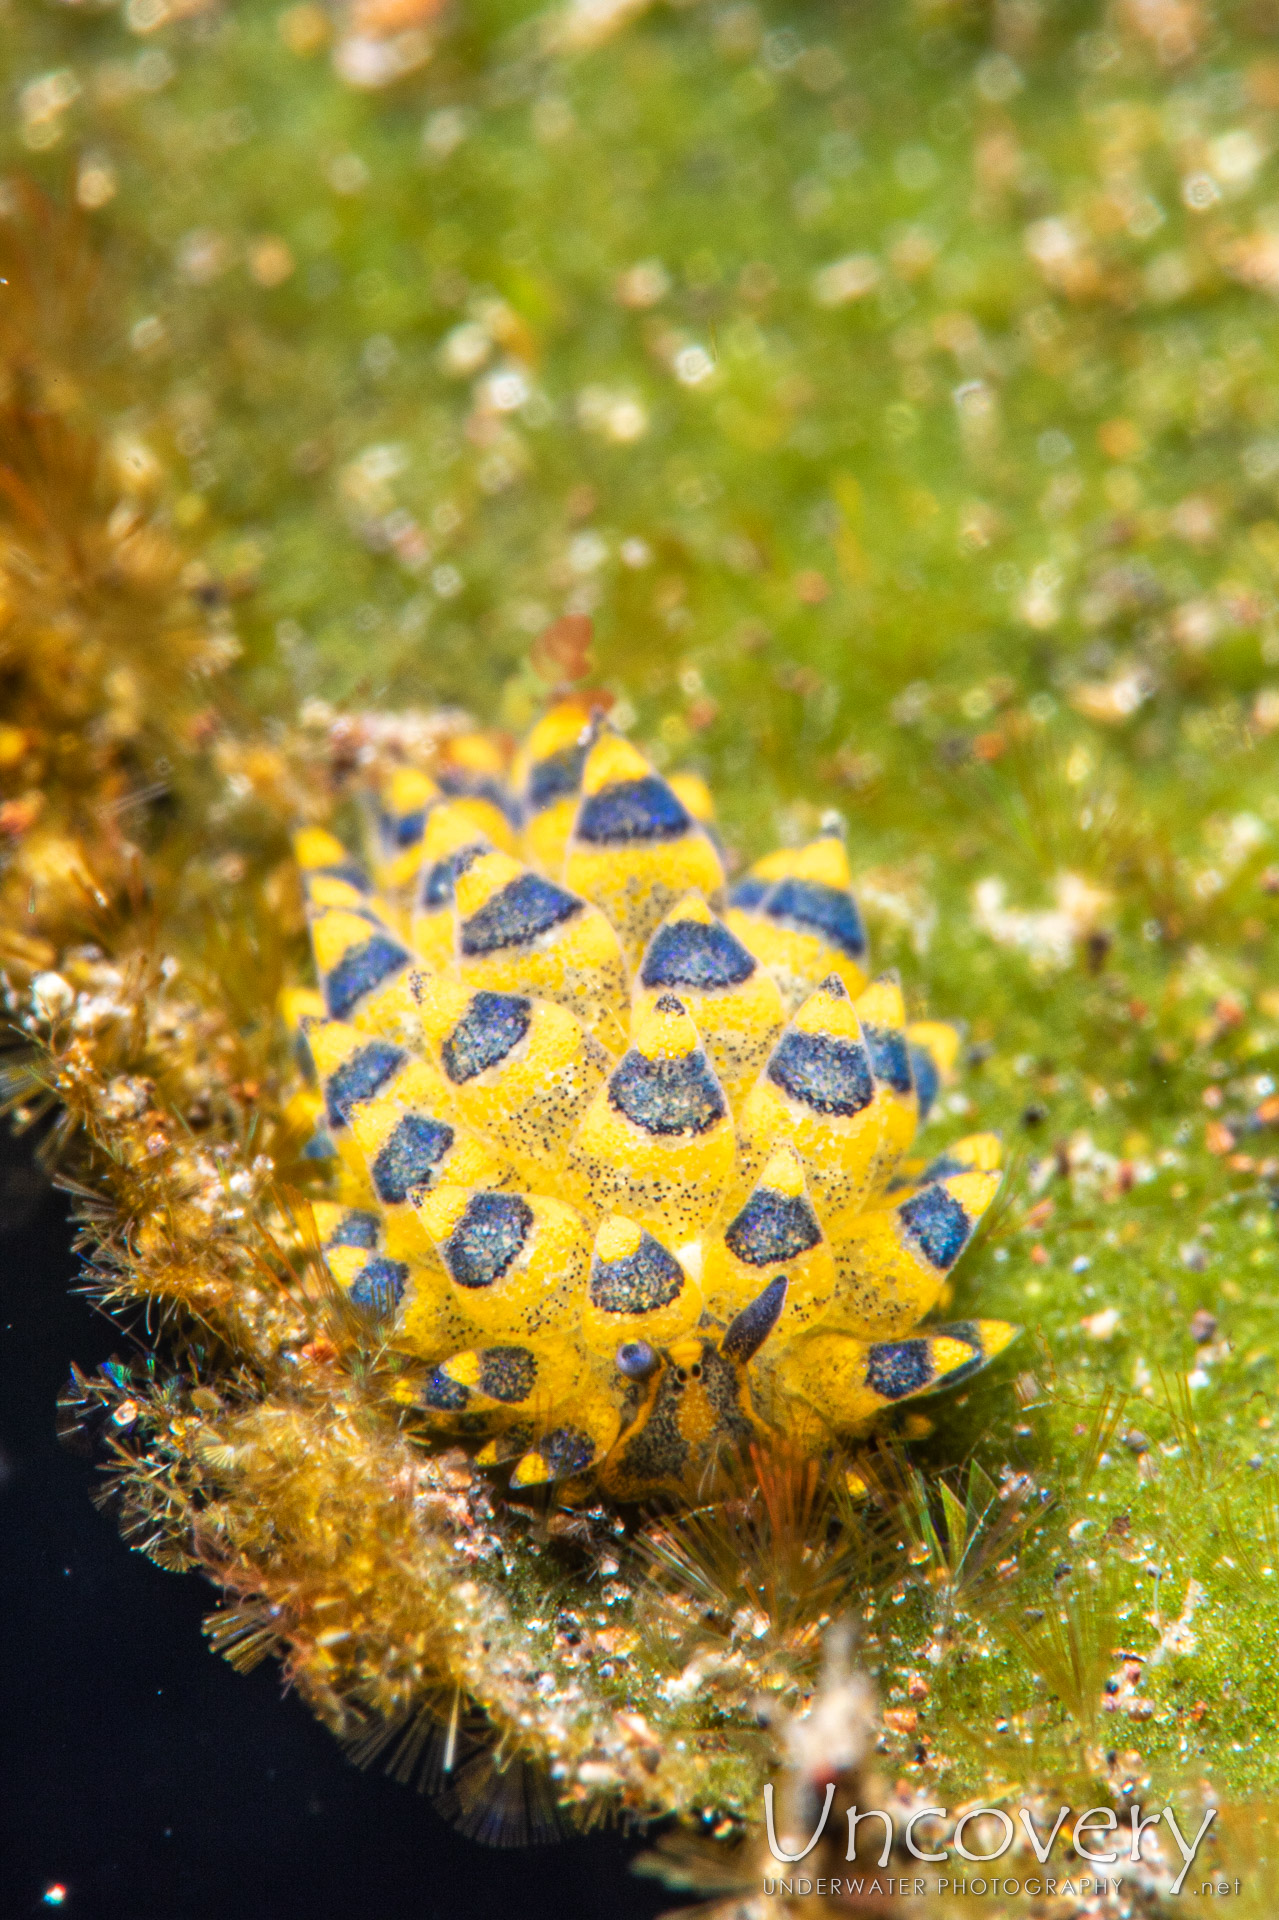 Nudibranch (costasiella Sp.), photo taken in Indonesia, Bali, Tulamben, Segara